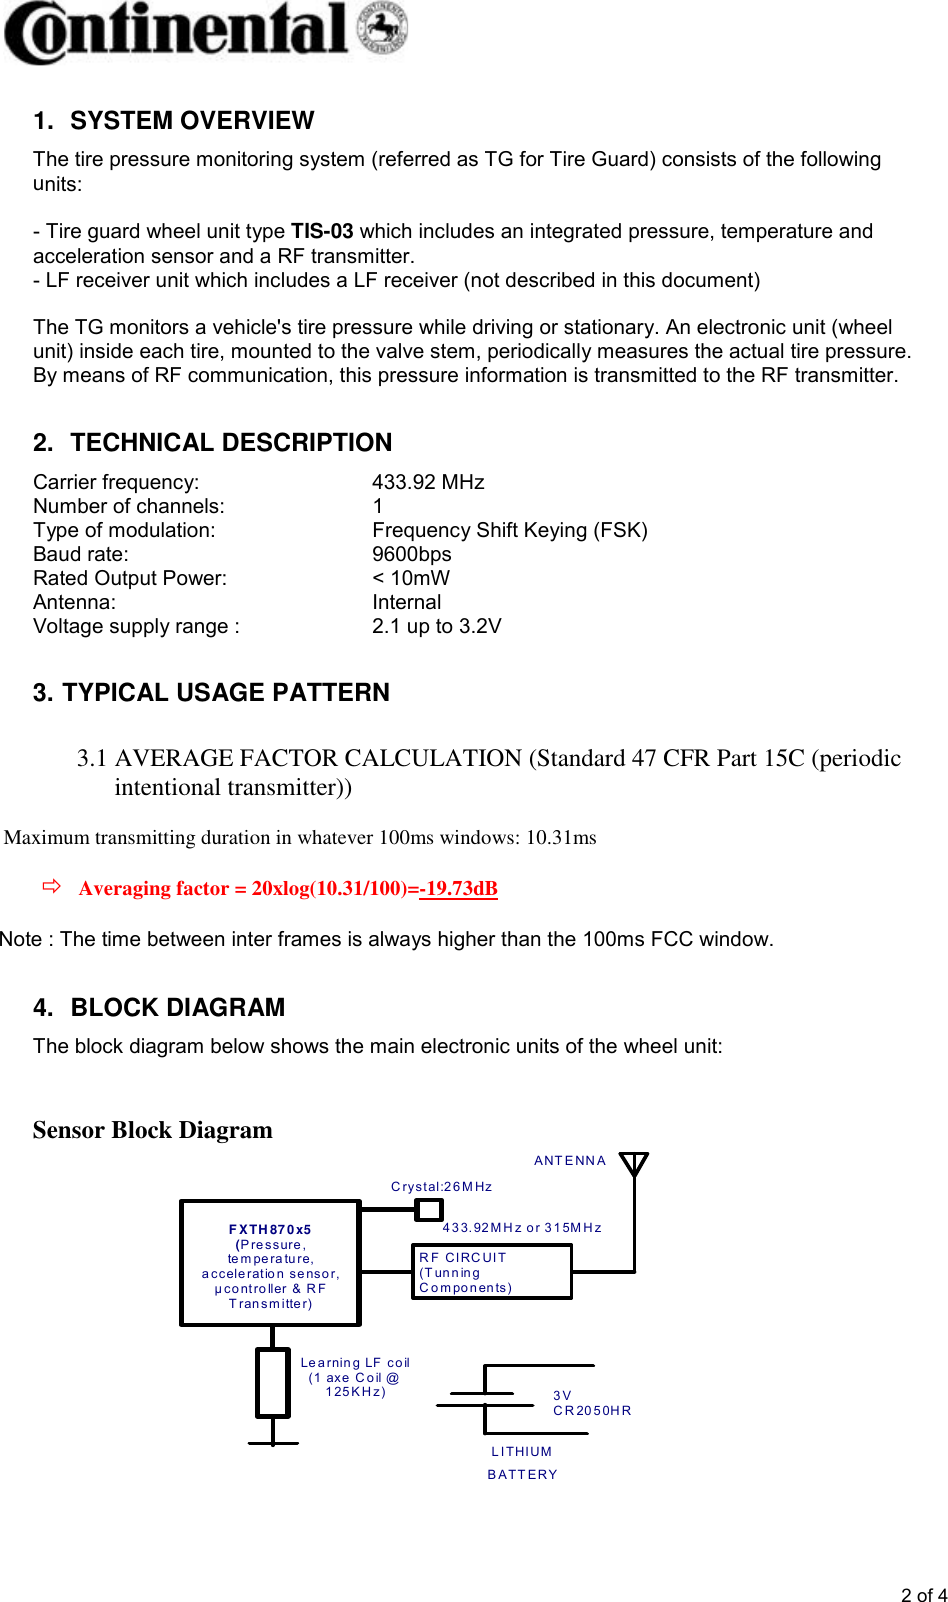 Continental Automotive Tis 03 Tire Pressure Monitoring System User Manual Tg1d Chrysler Functional Description V4